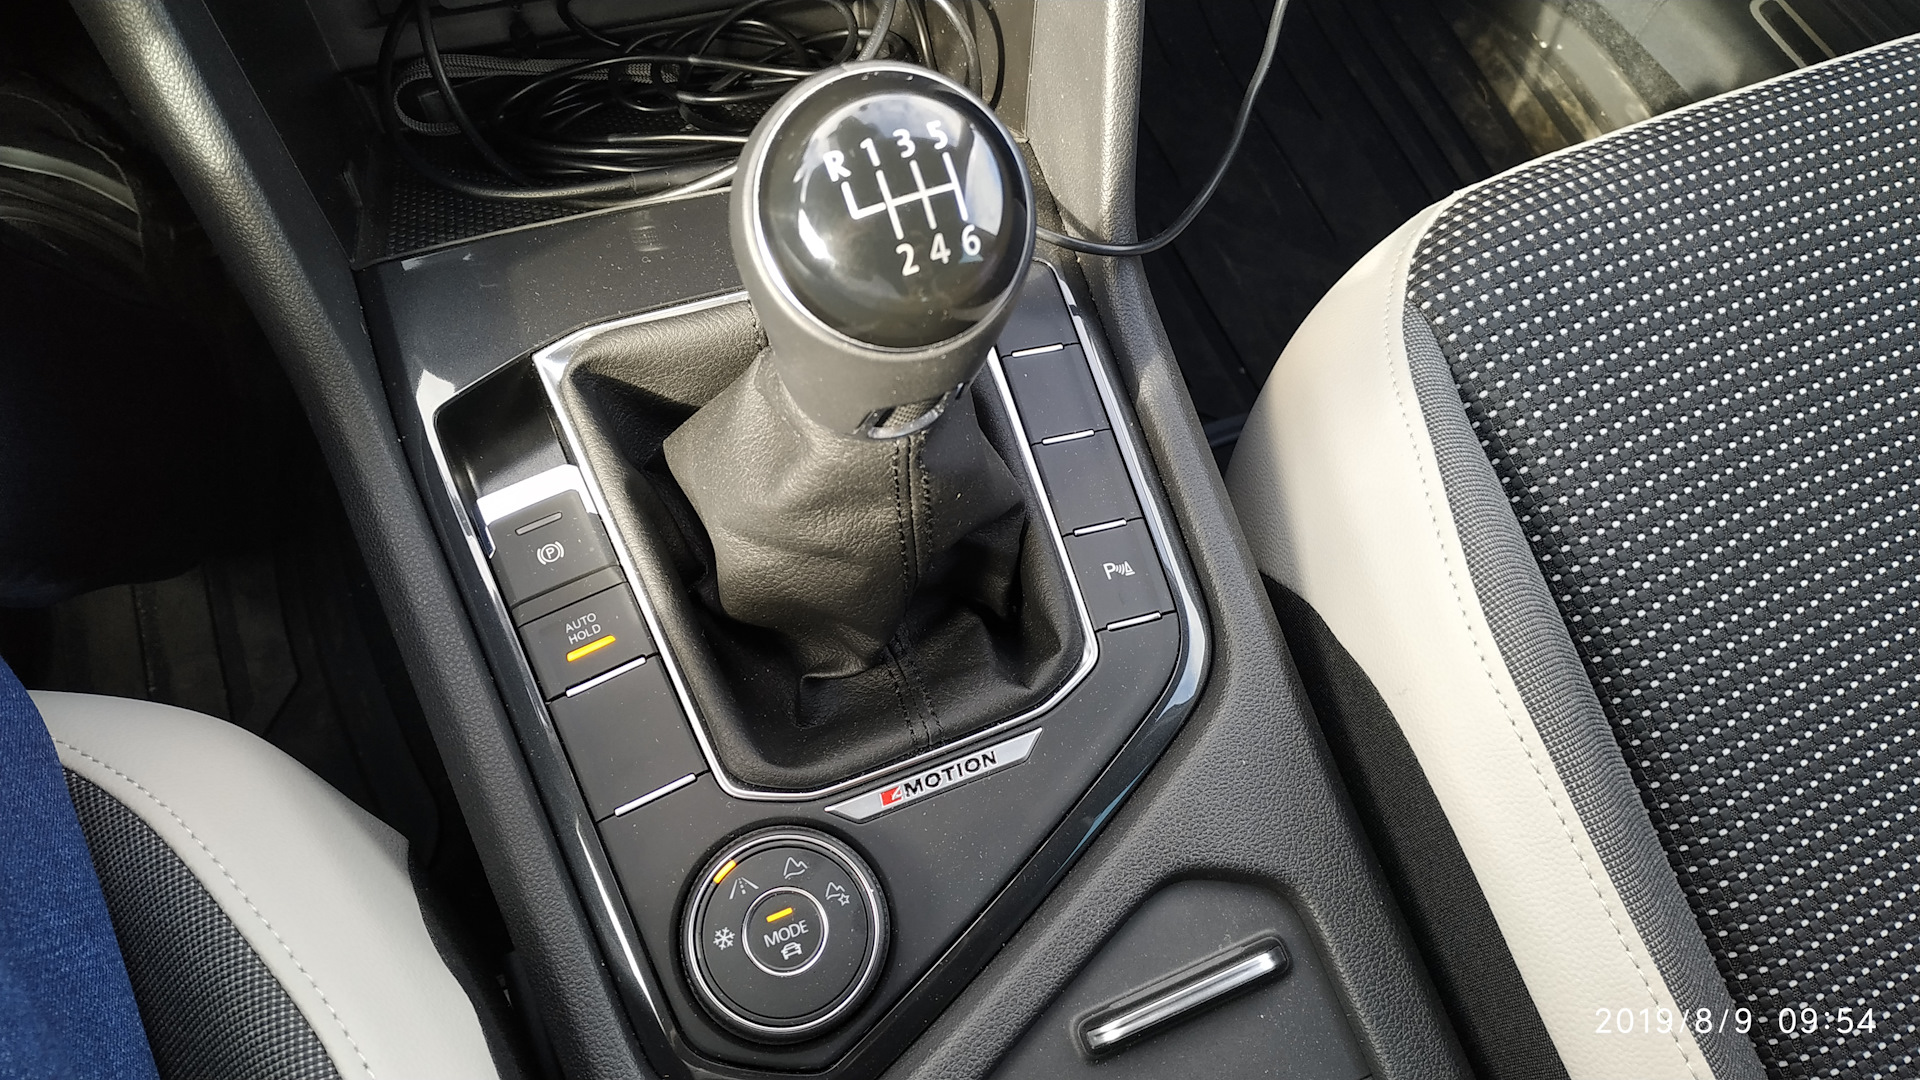 Vin коробка передач. Ручка АКПП Тигуан 2. Кнопка Mode Тигуан 2. Переключатель полного привода Тигуан 2. Ручка МКПП VW Tiguan 2015.